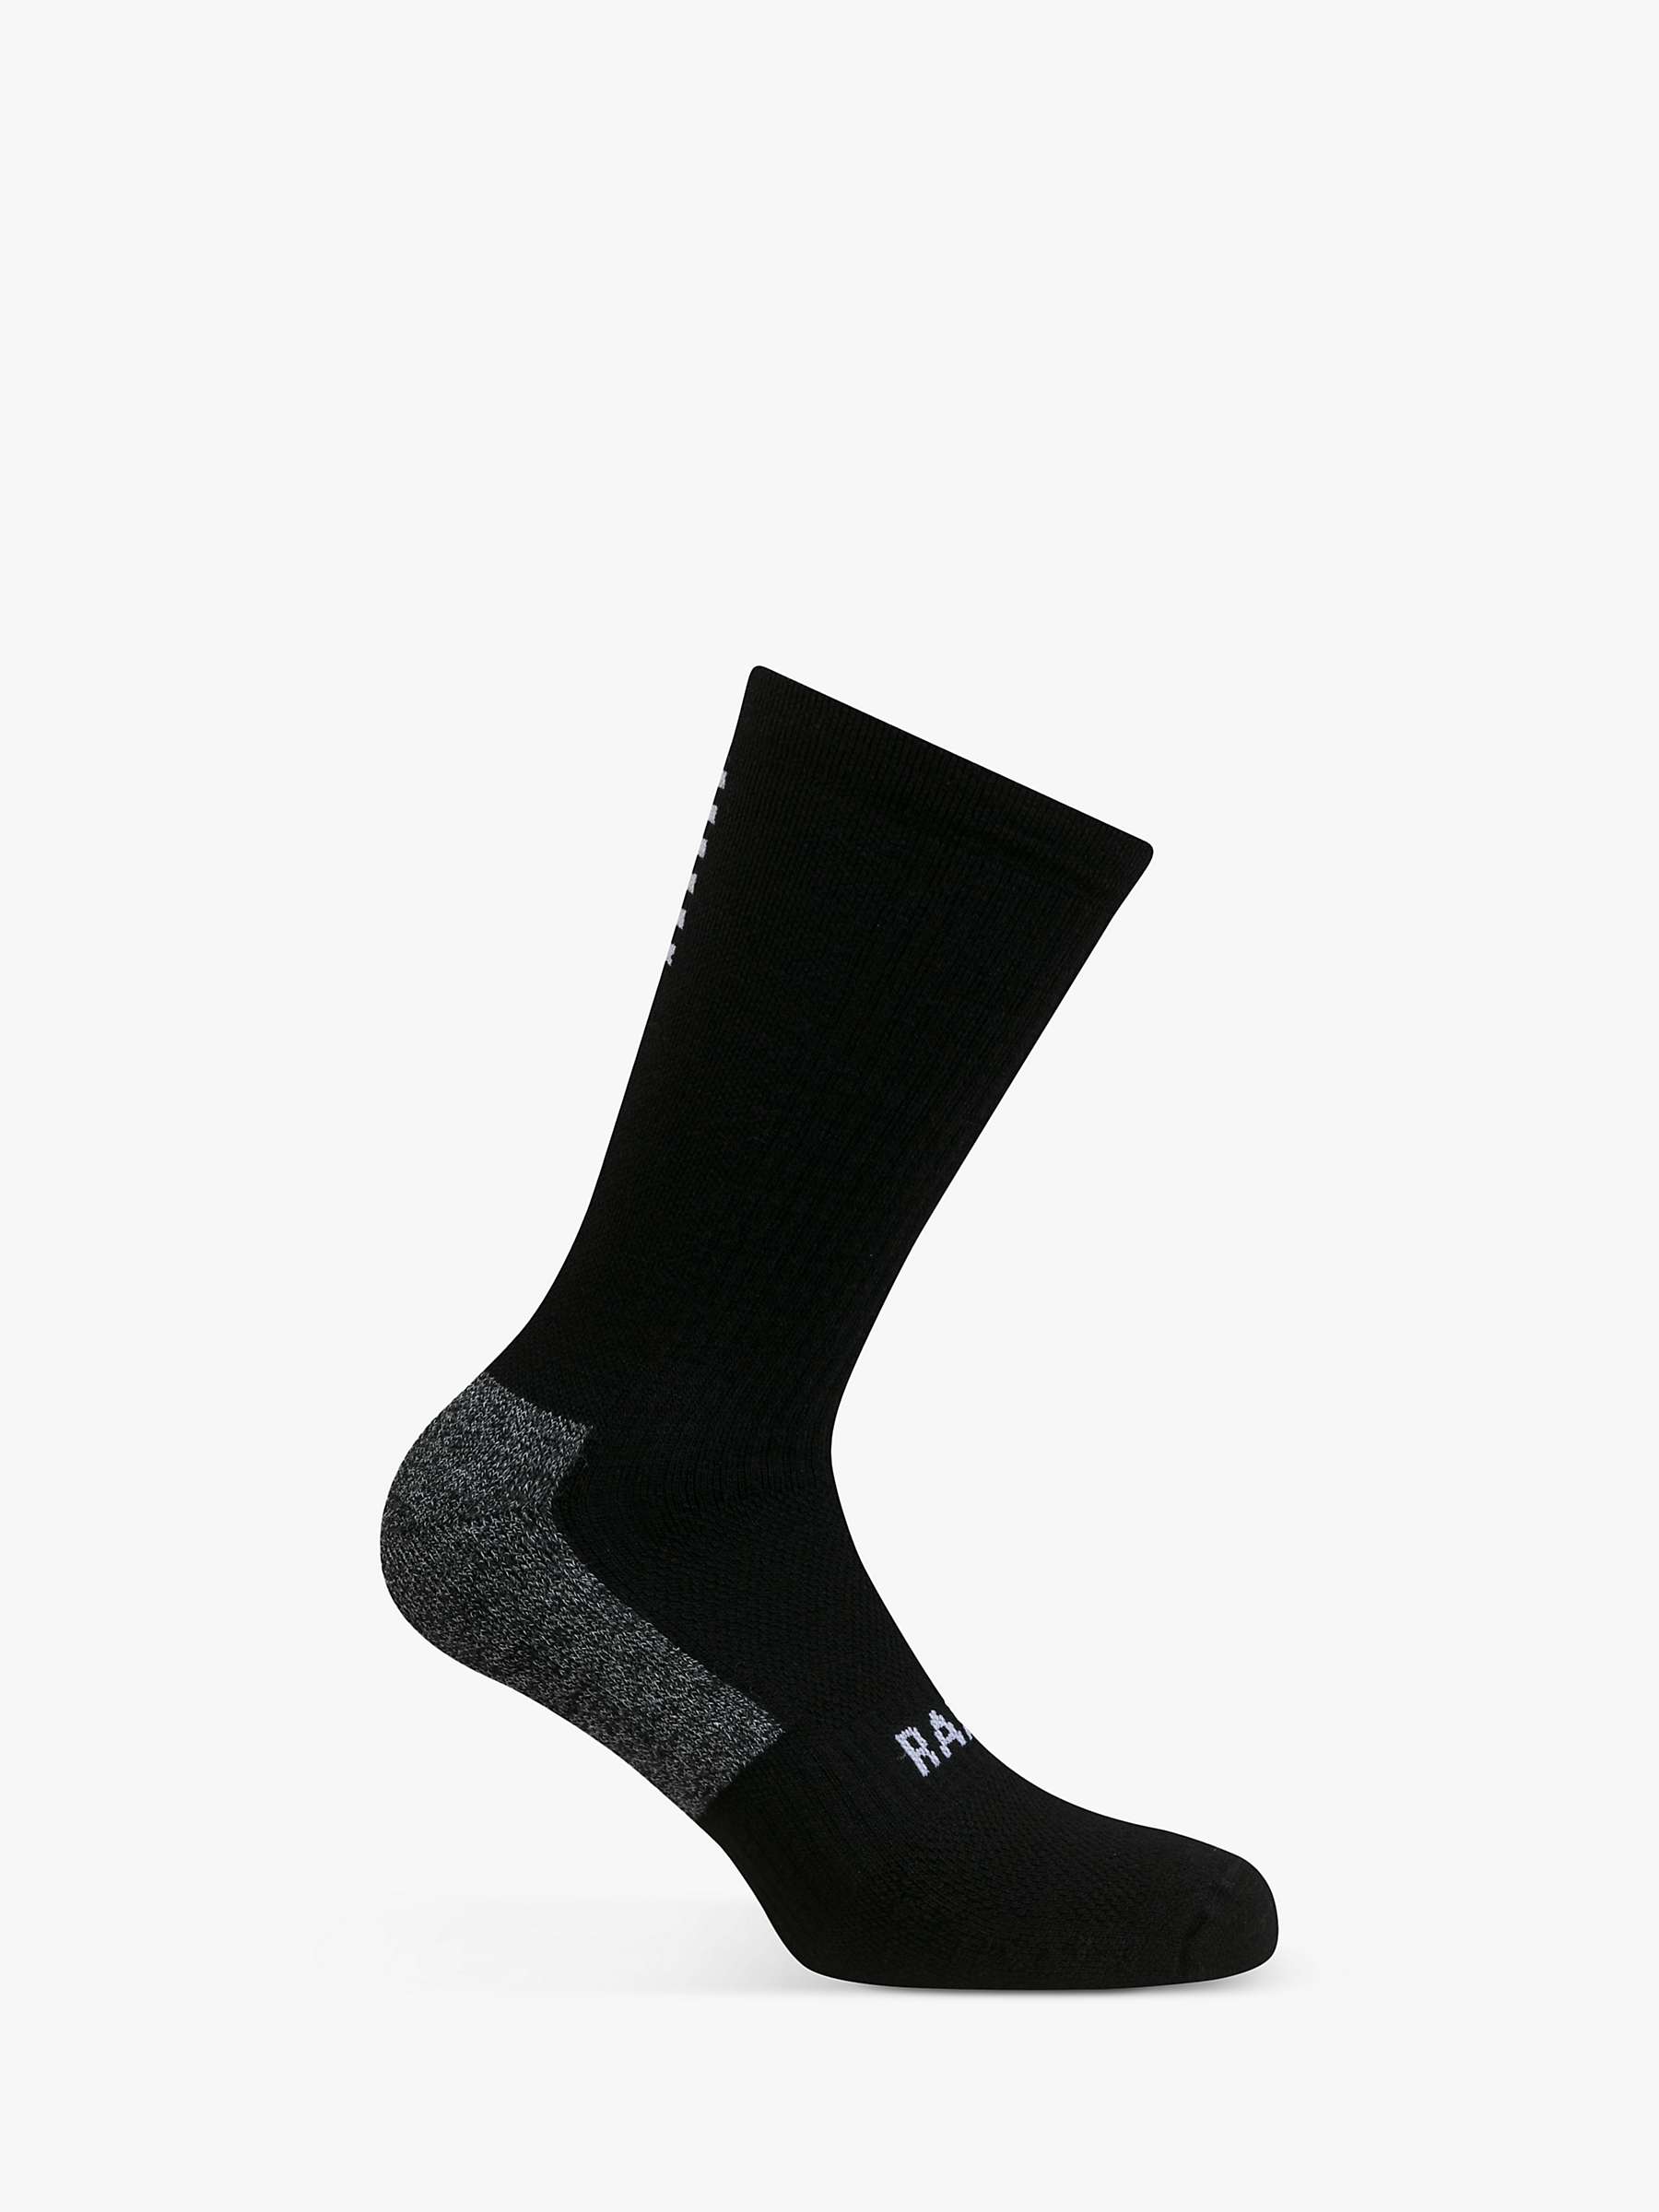 Rapha Pro Team Winter Socks, Black/White at John Lewis & Partners